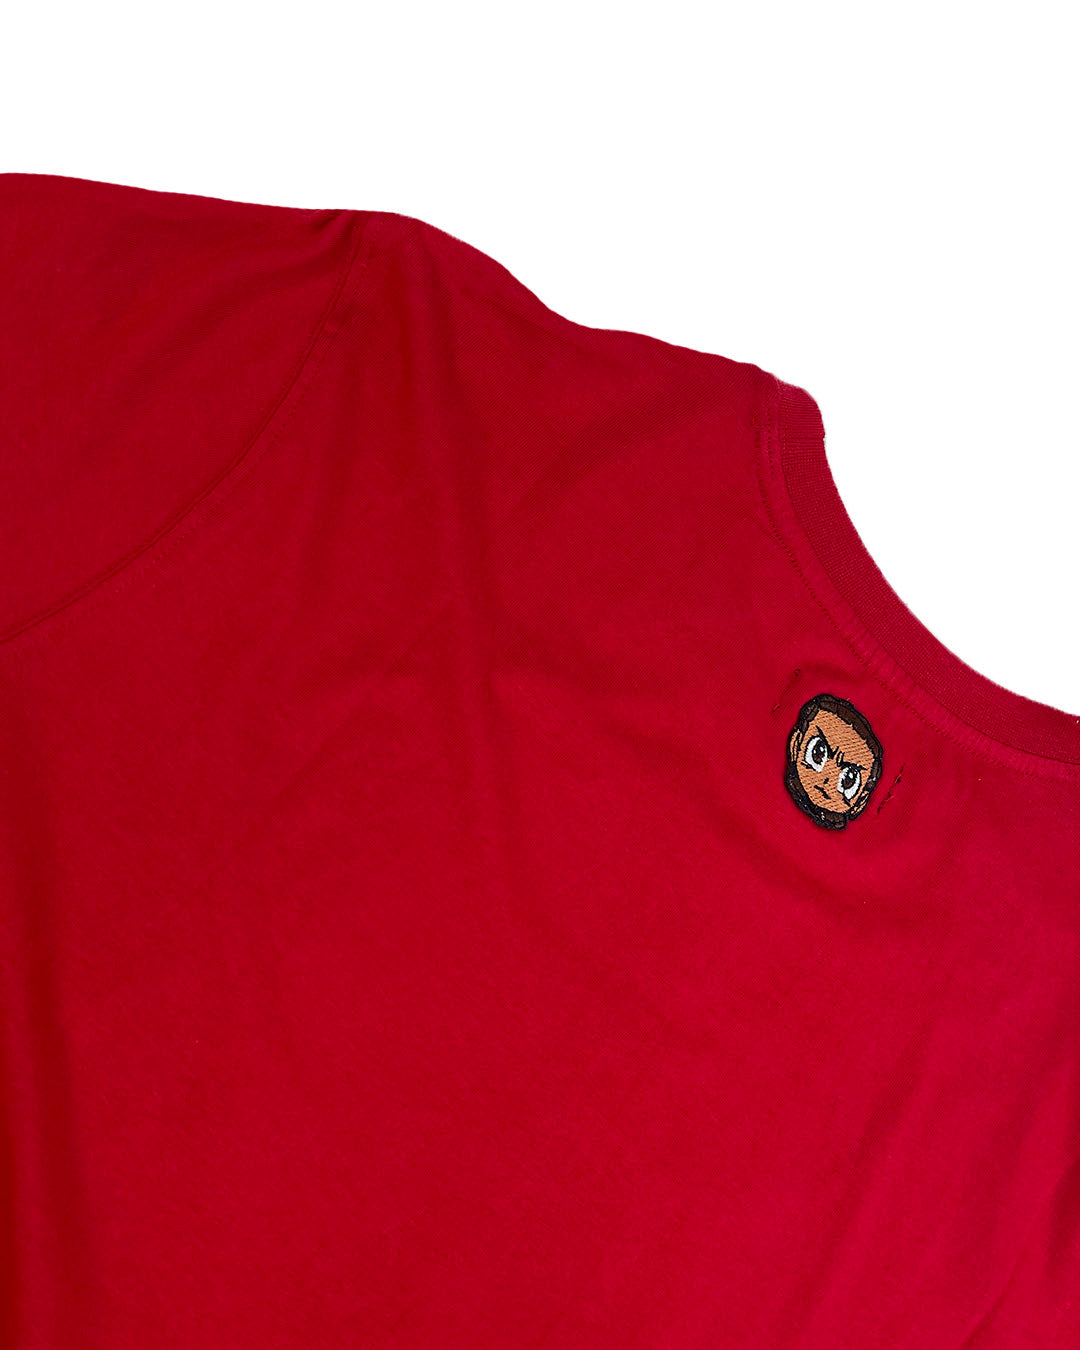 deKryptic x The Boondocks - Huey Boondocks Logo Embroidered Red T-Shirt